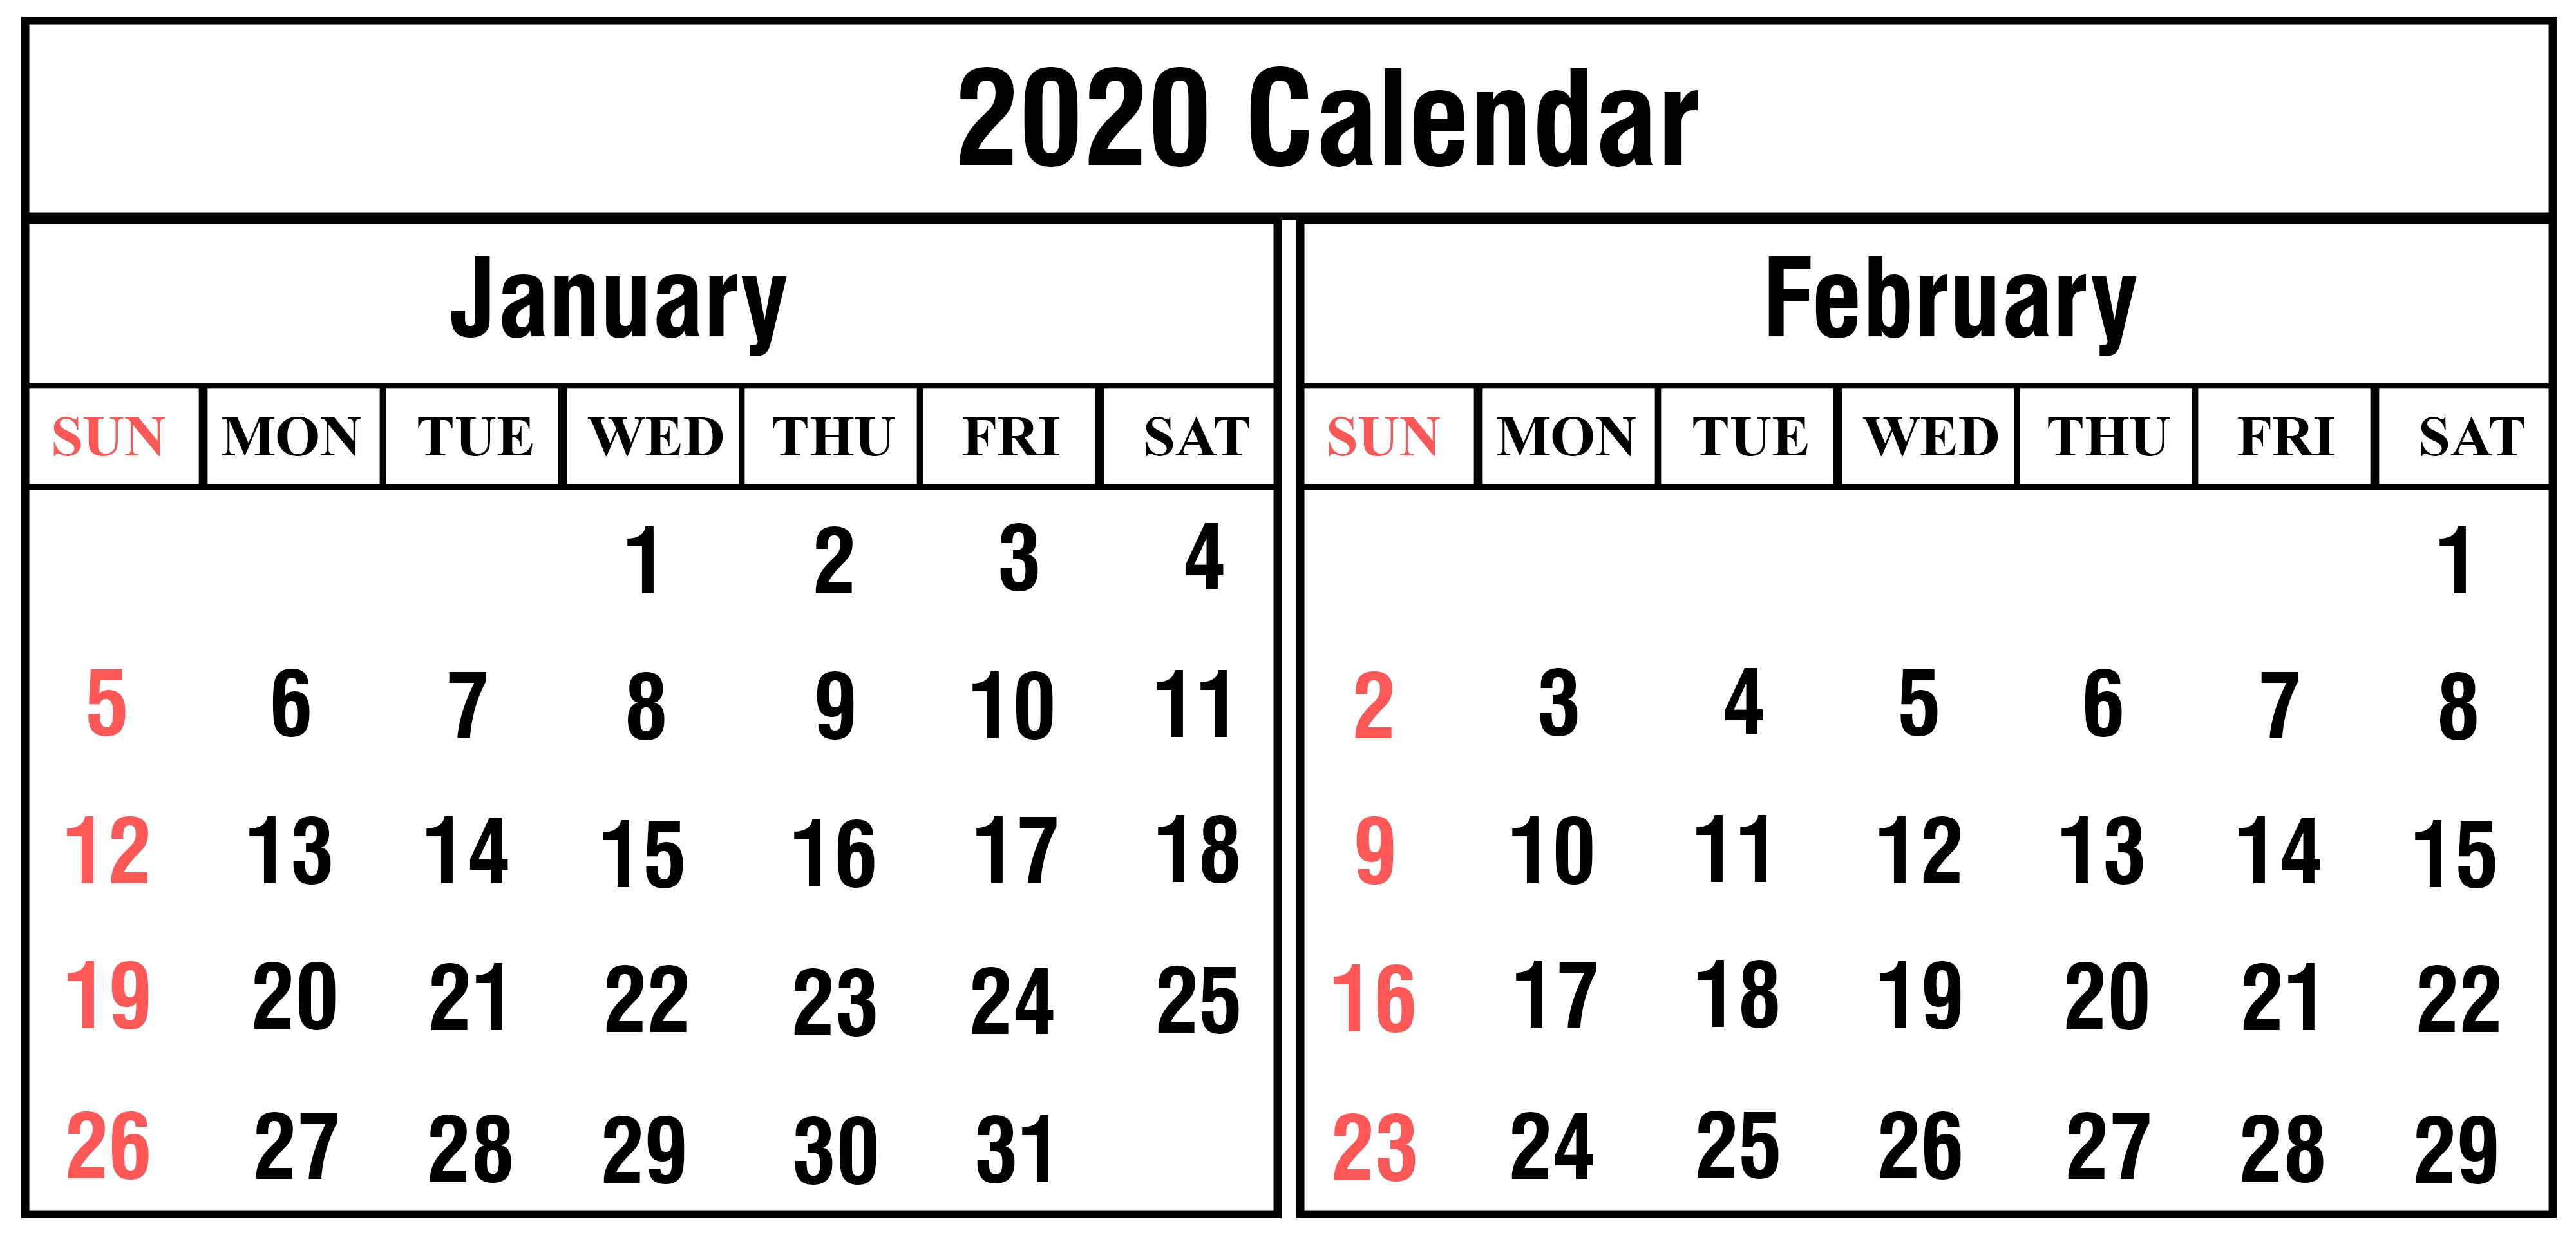 Free January And February 2020 Calendar Printable Templates-2020 January February Calendar